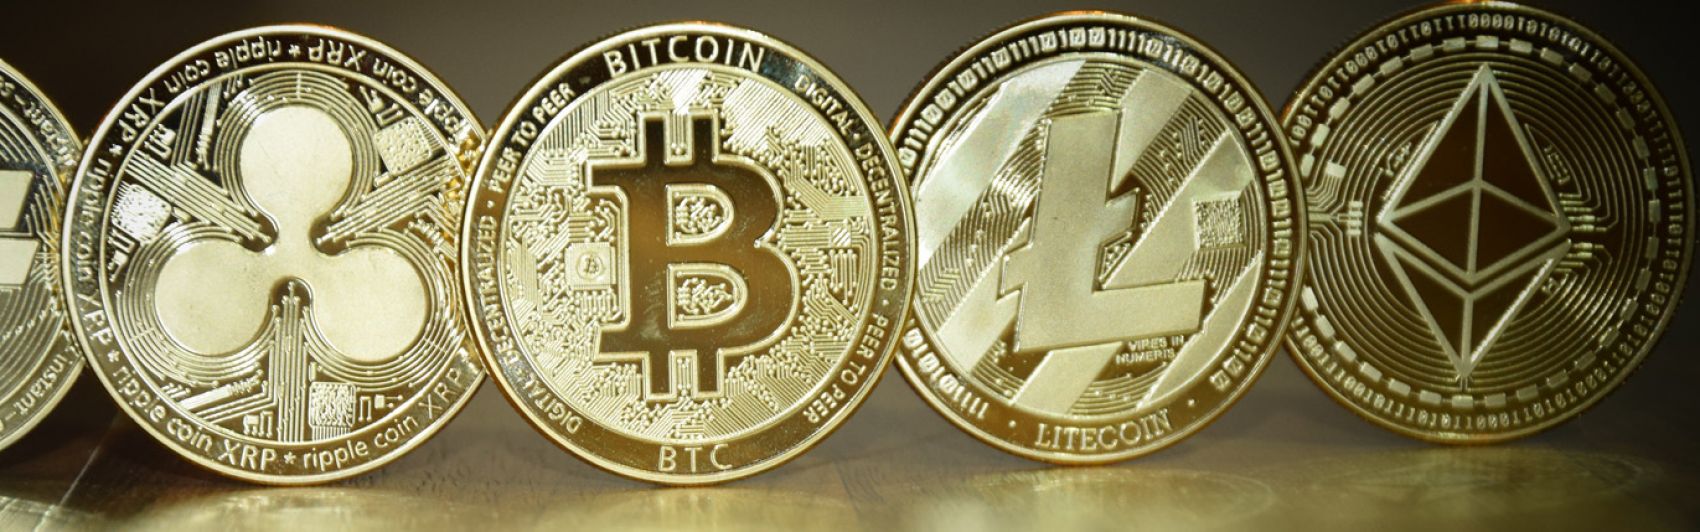 Kryptowährung Bitcoin, Cryptocurrency